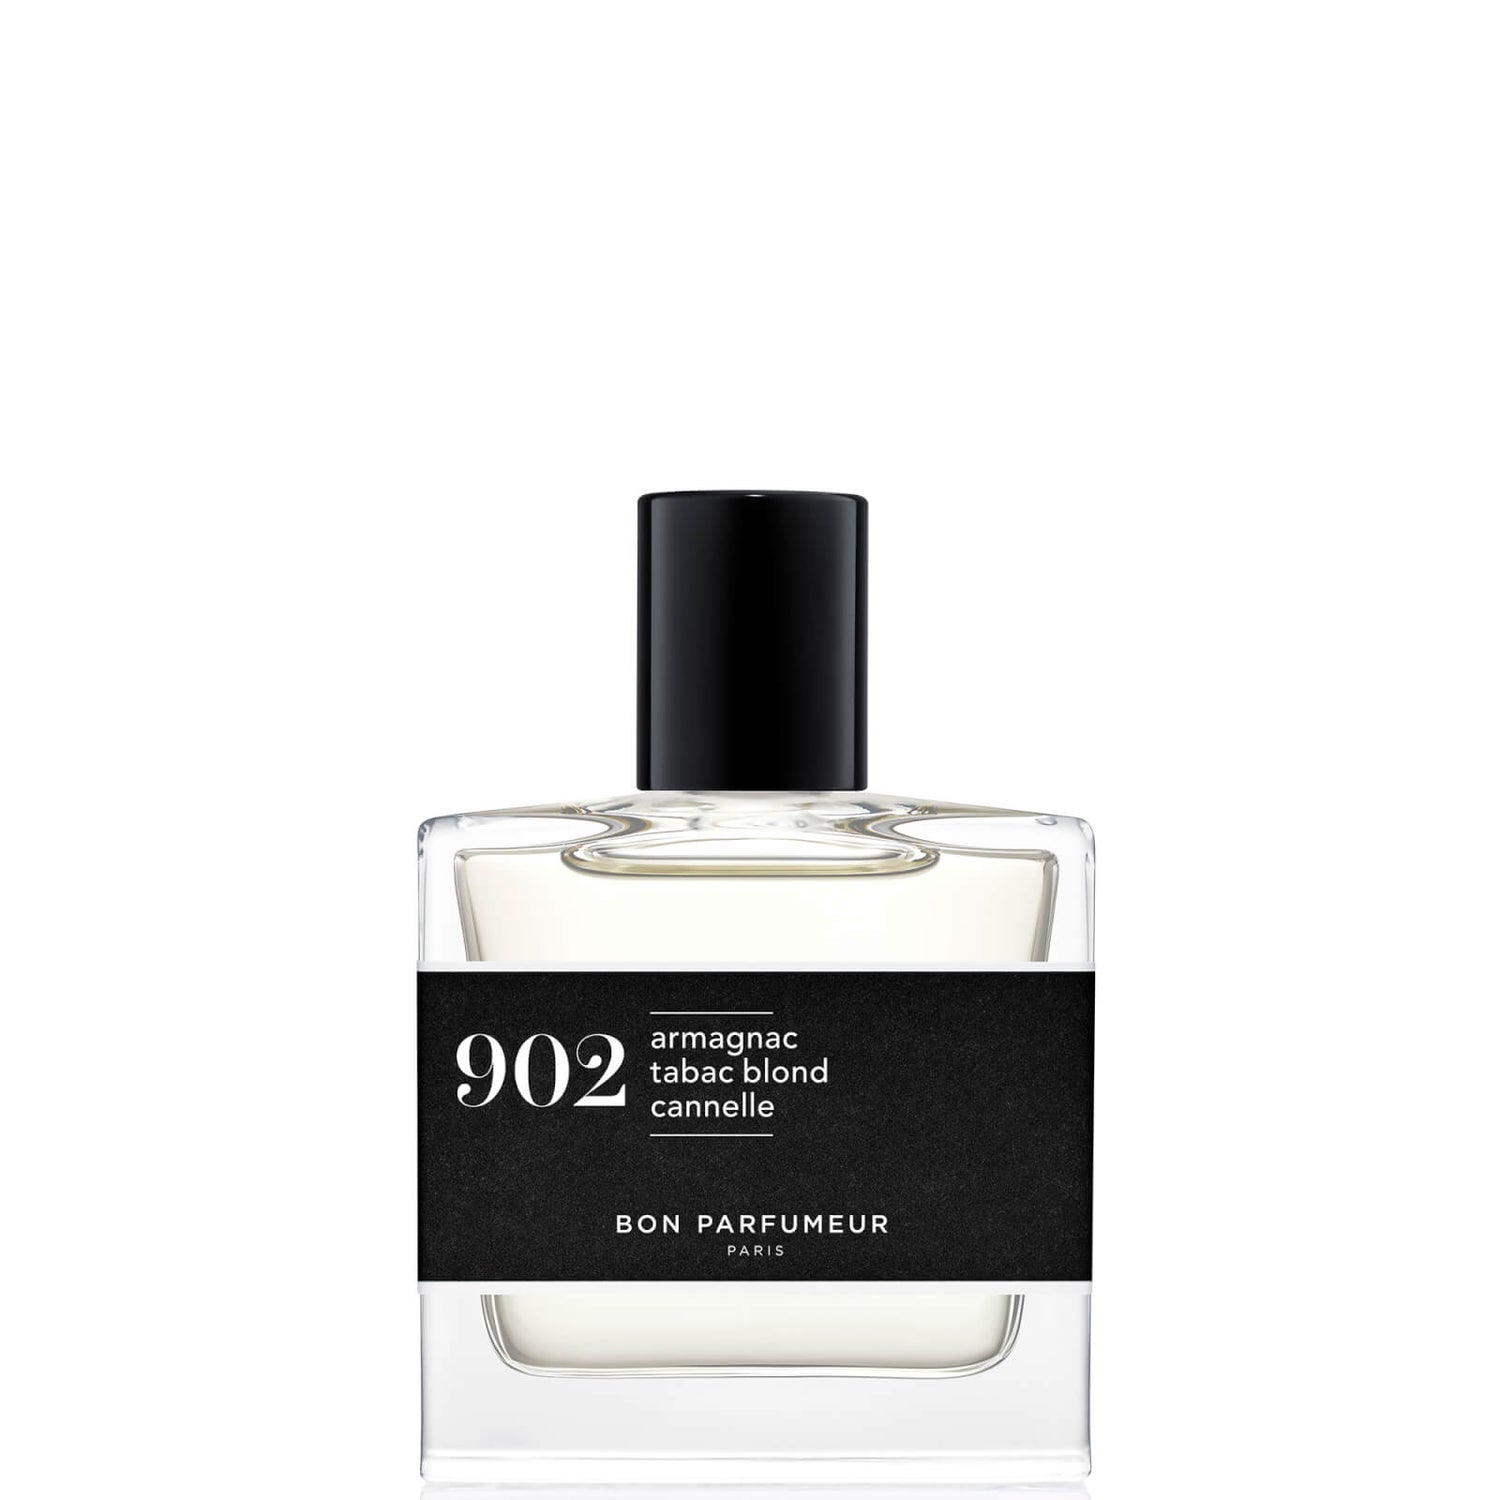 Bon Parfumeur 902 Armagnac Biondo Tabacco Cannella Eau de Parfum - 30ml